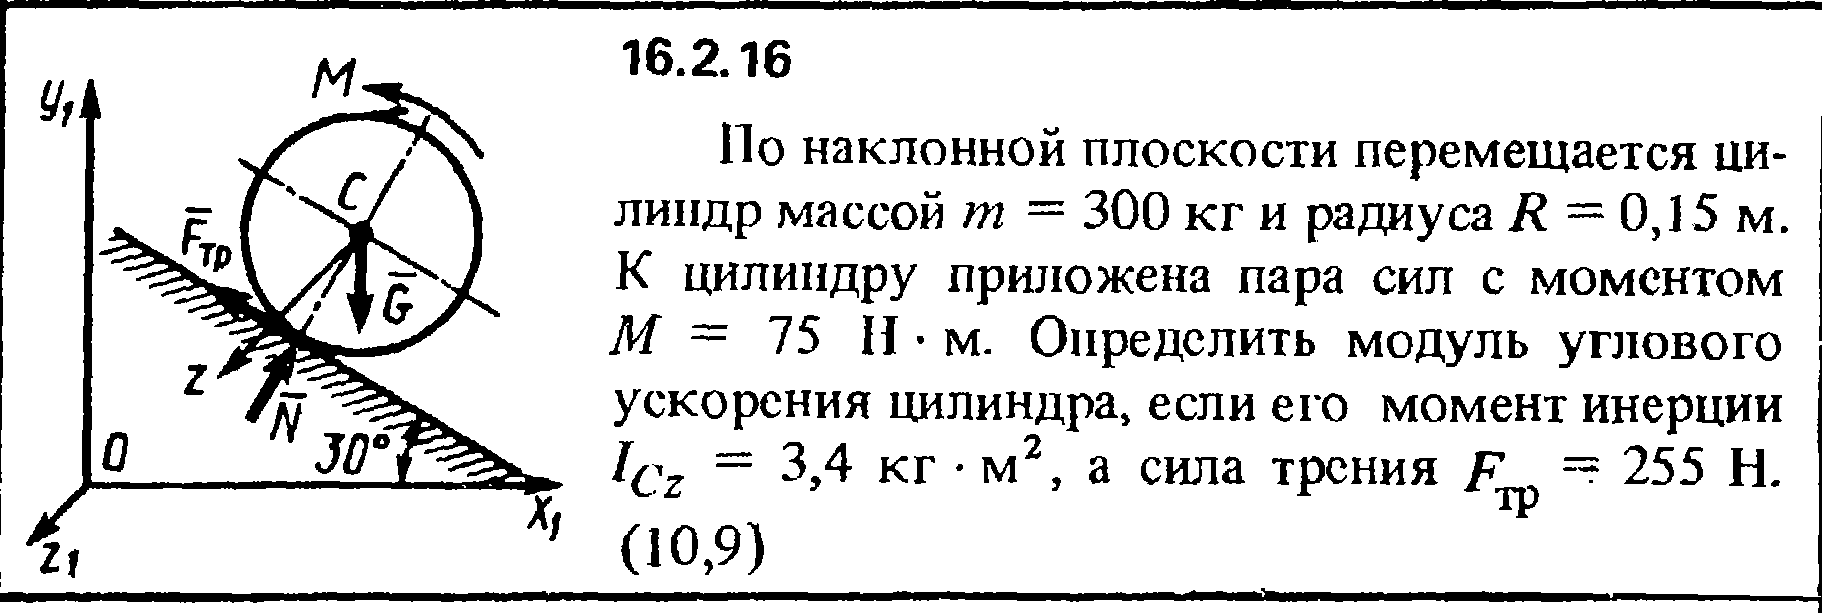 Решение задачи 16.2.16 из сборника Кепе О.Е. 1989 года